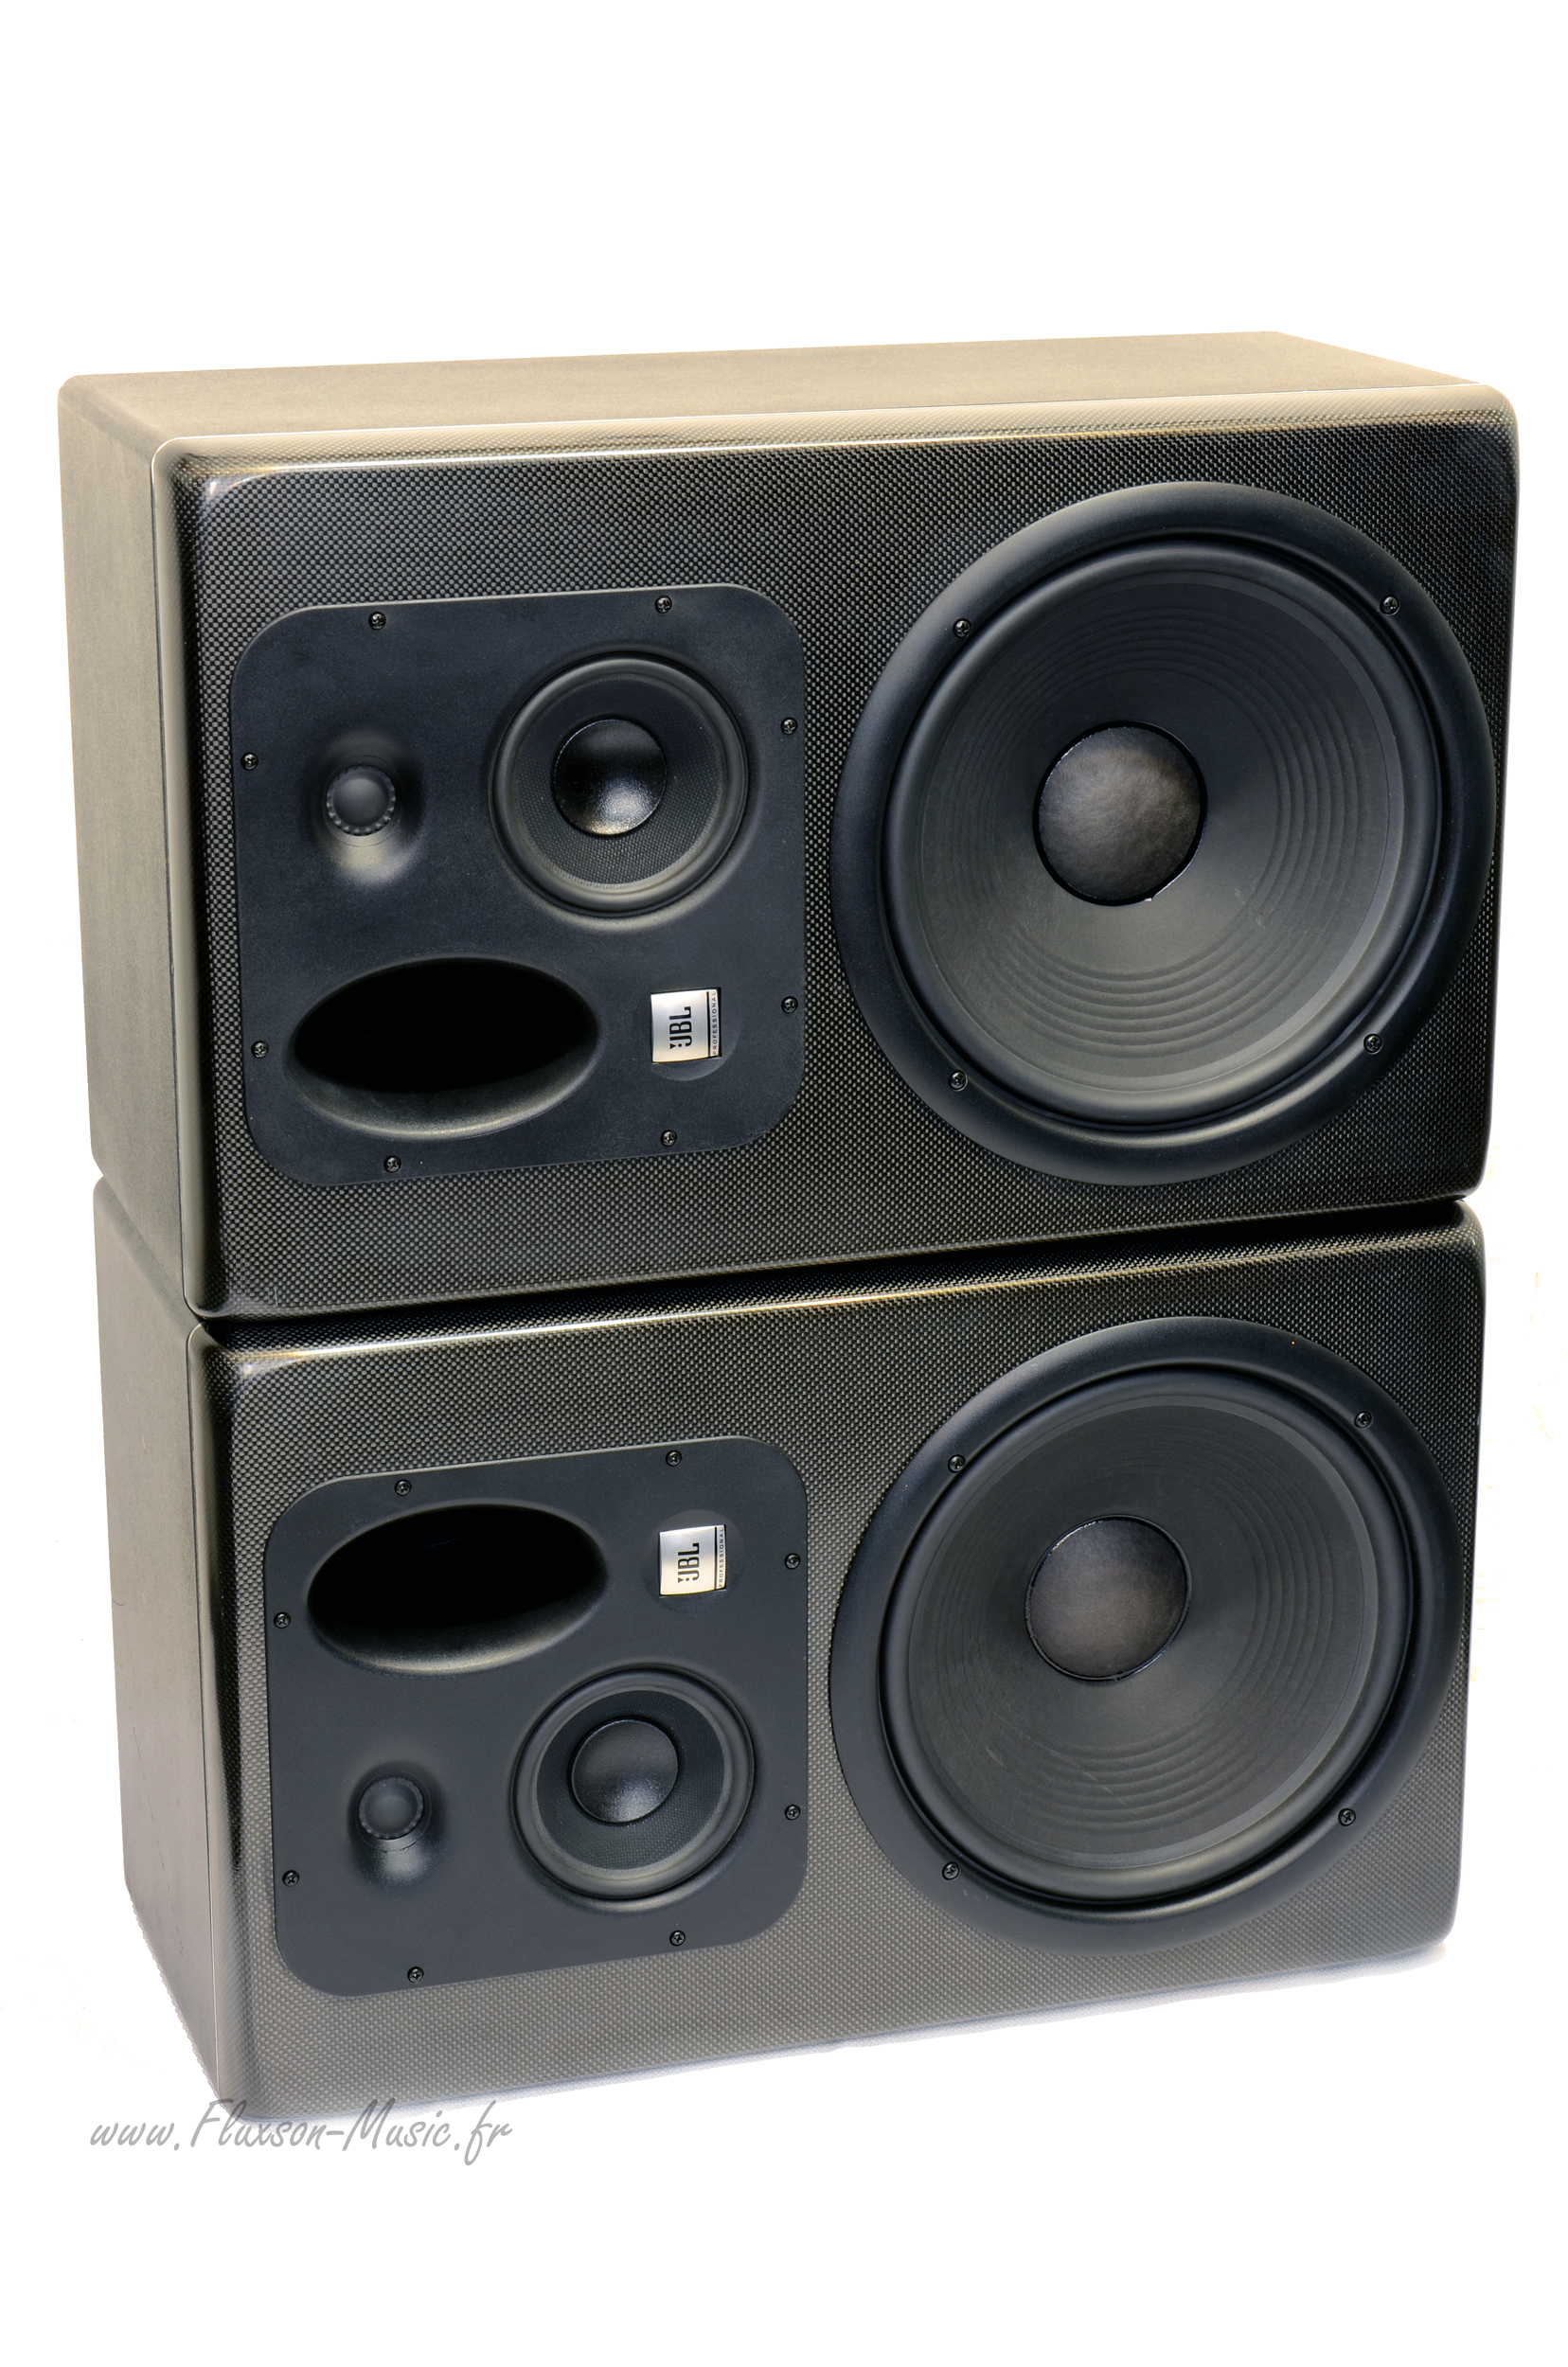 Personas mayores estante proyector JBL LSR32 2002 Amp For Sale Fluxson Music